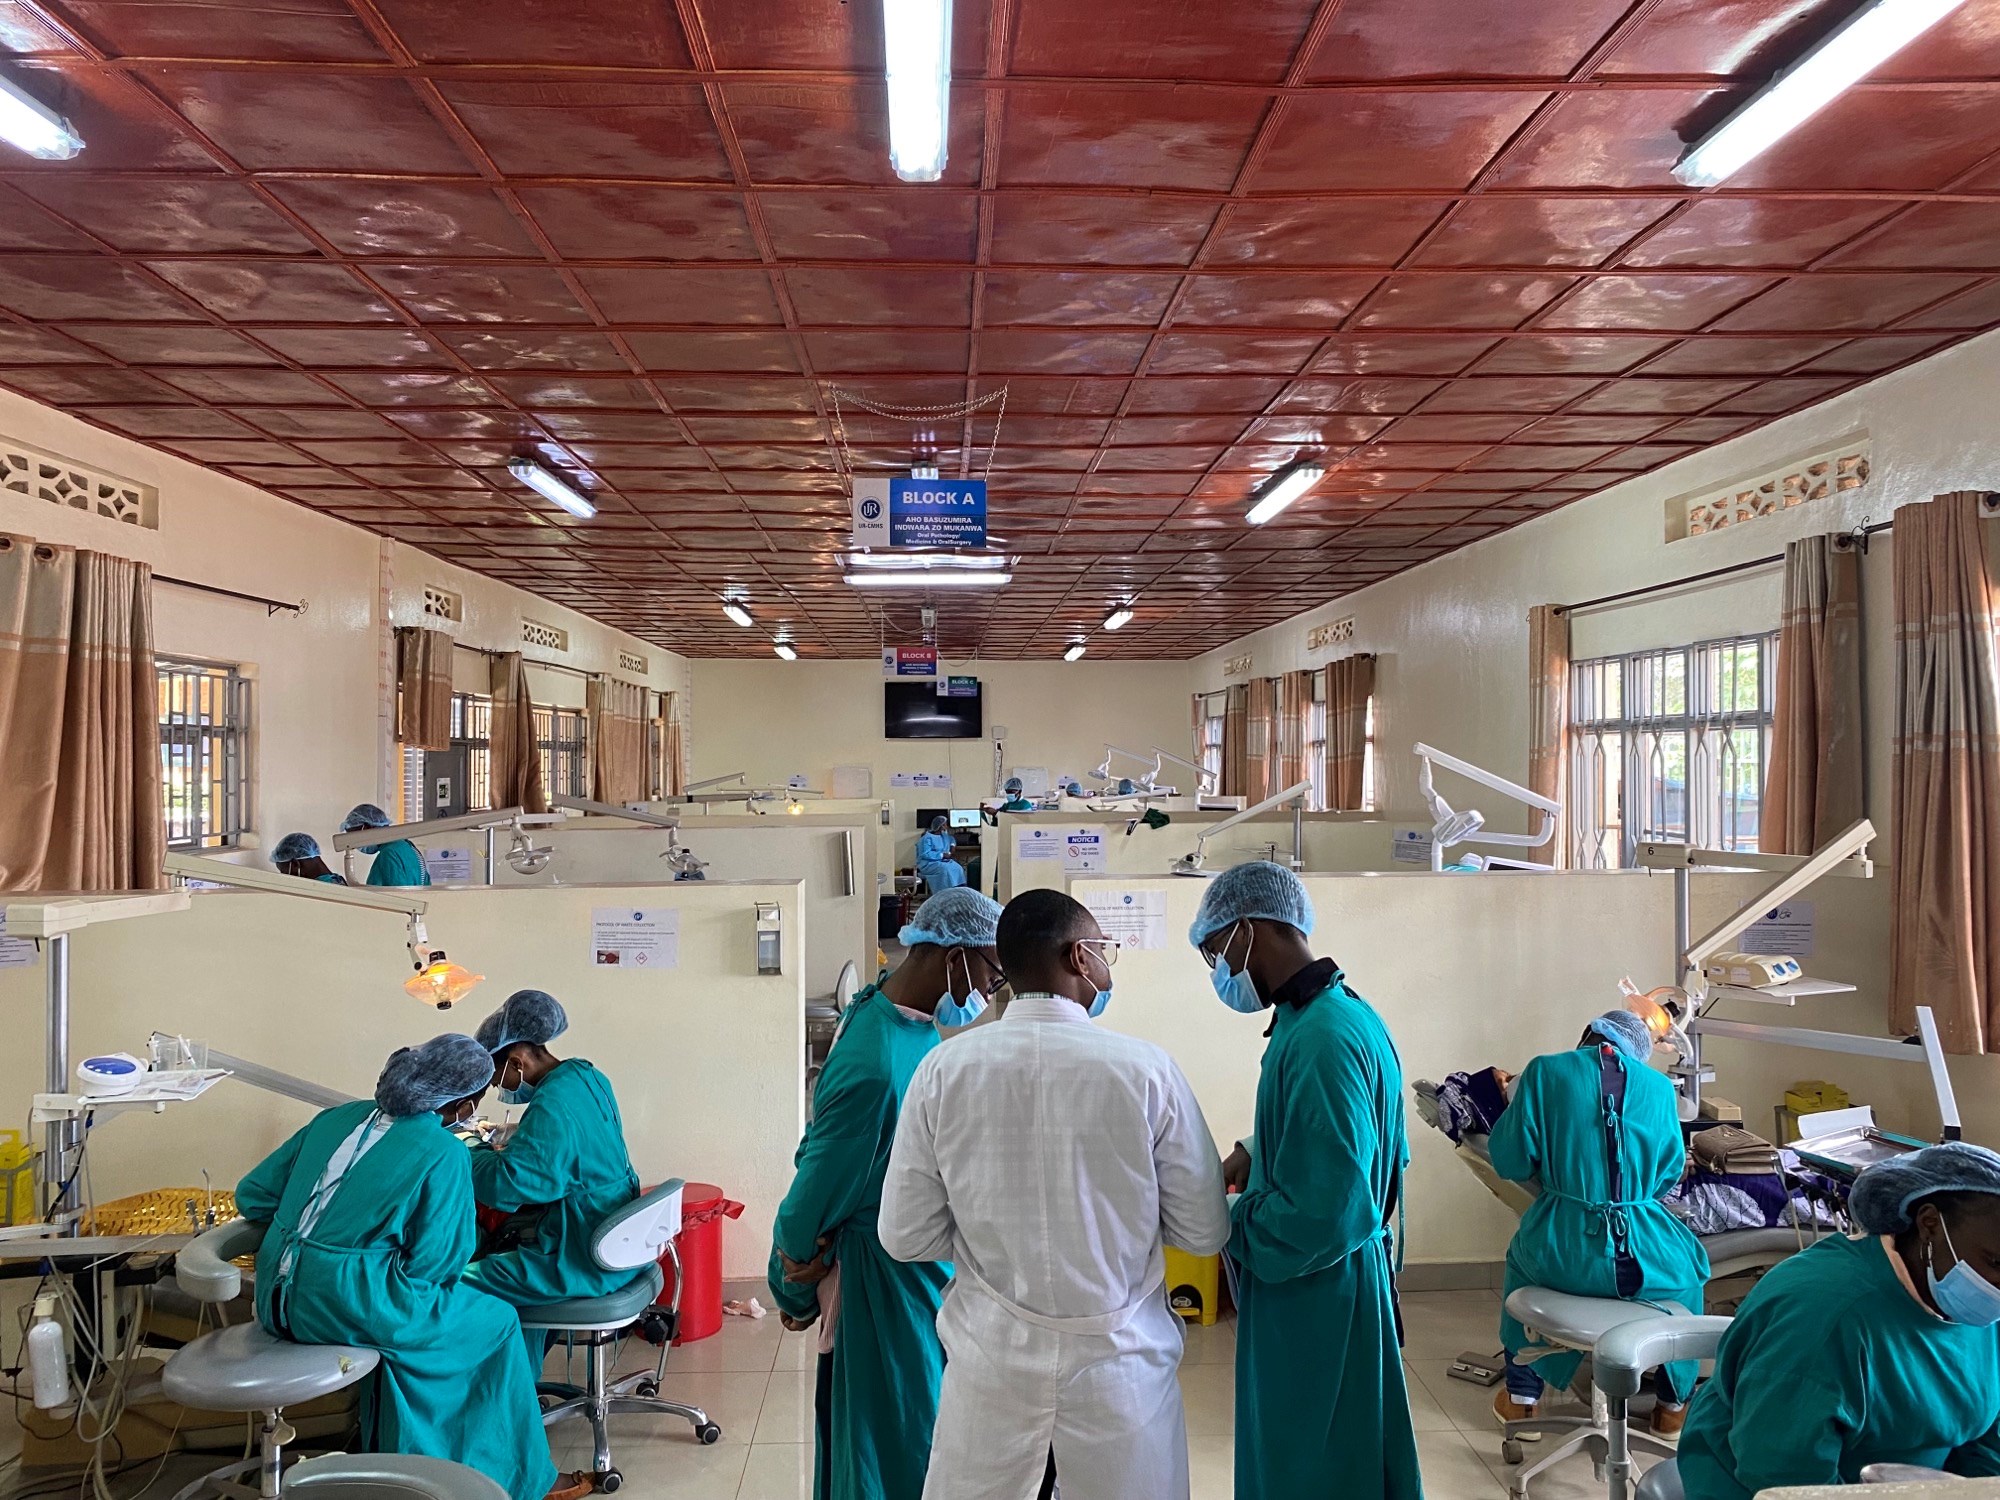 Dental students handling patients in clinical environment at University of Rwanda